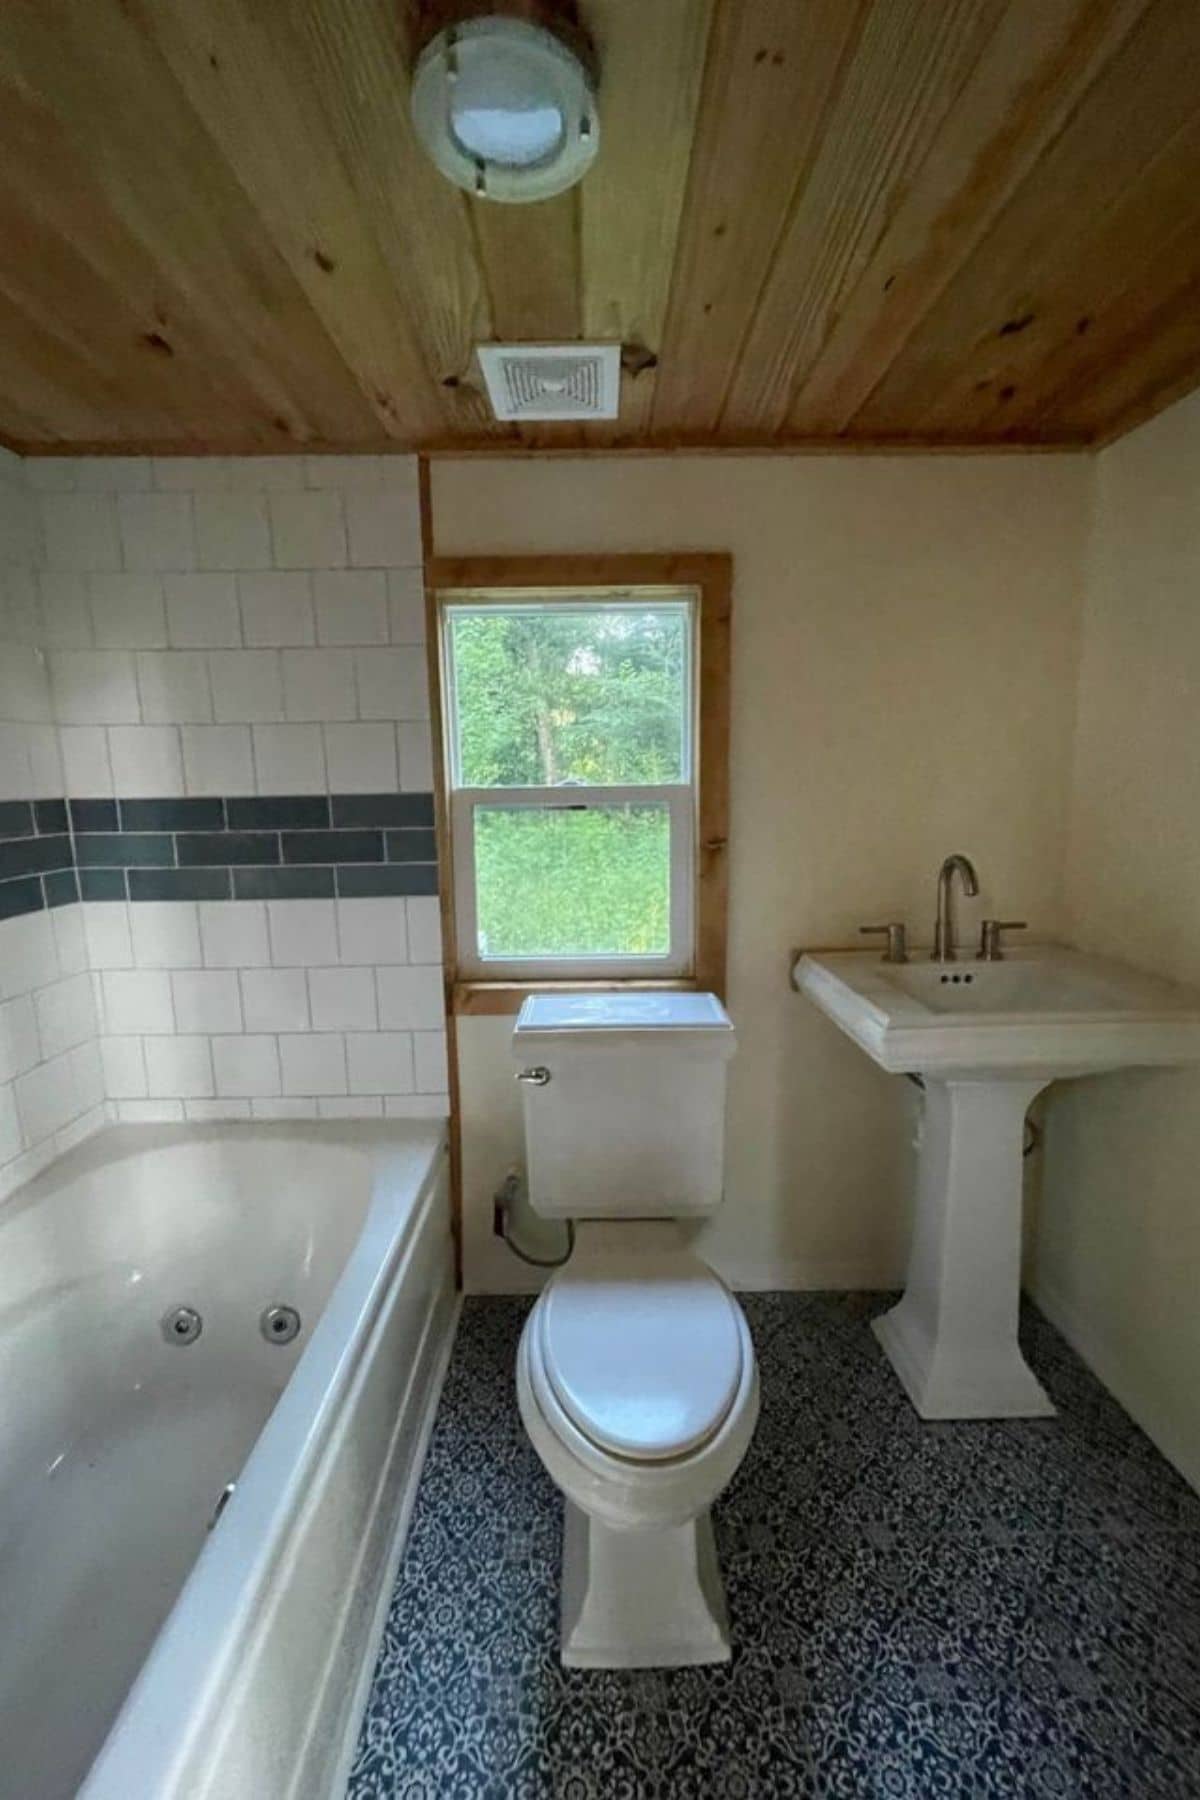 View into white bathroom with bathtub on left